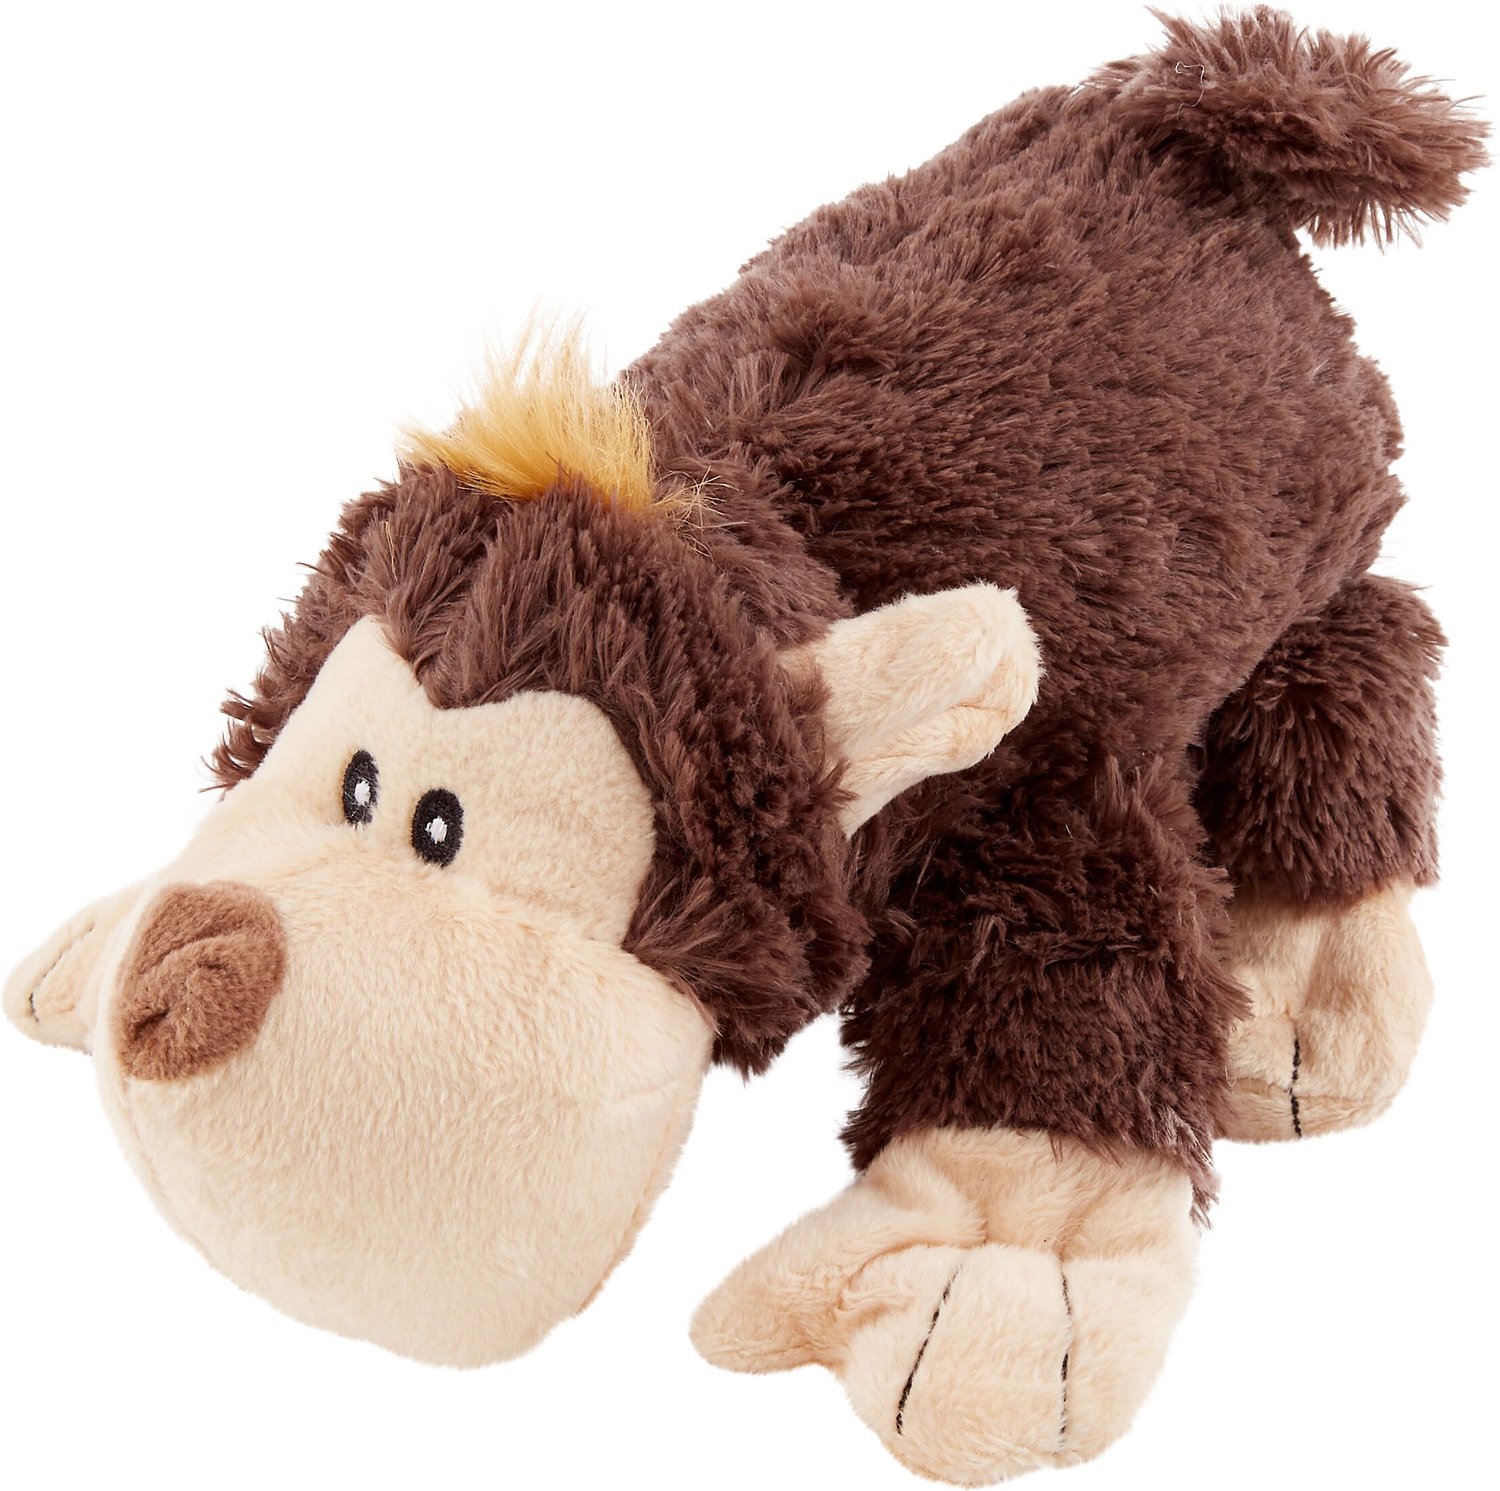 KONG Cozie Spunky the Monkey Dog Toy 